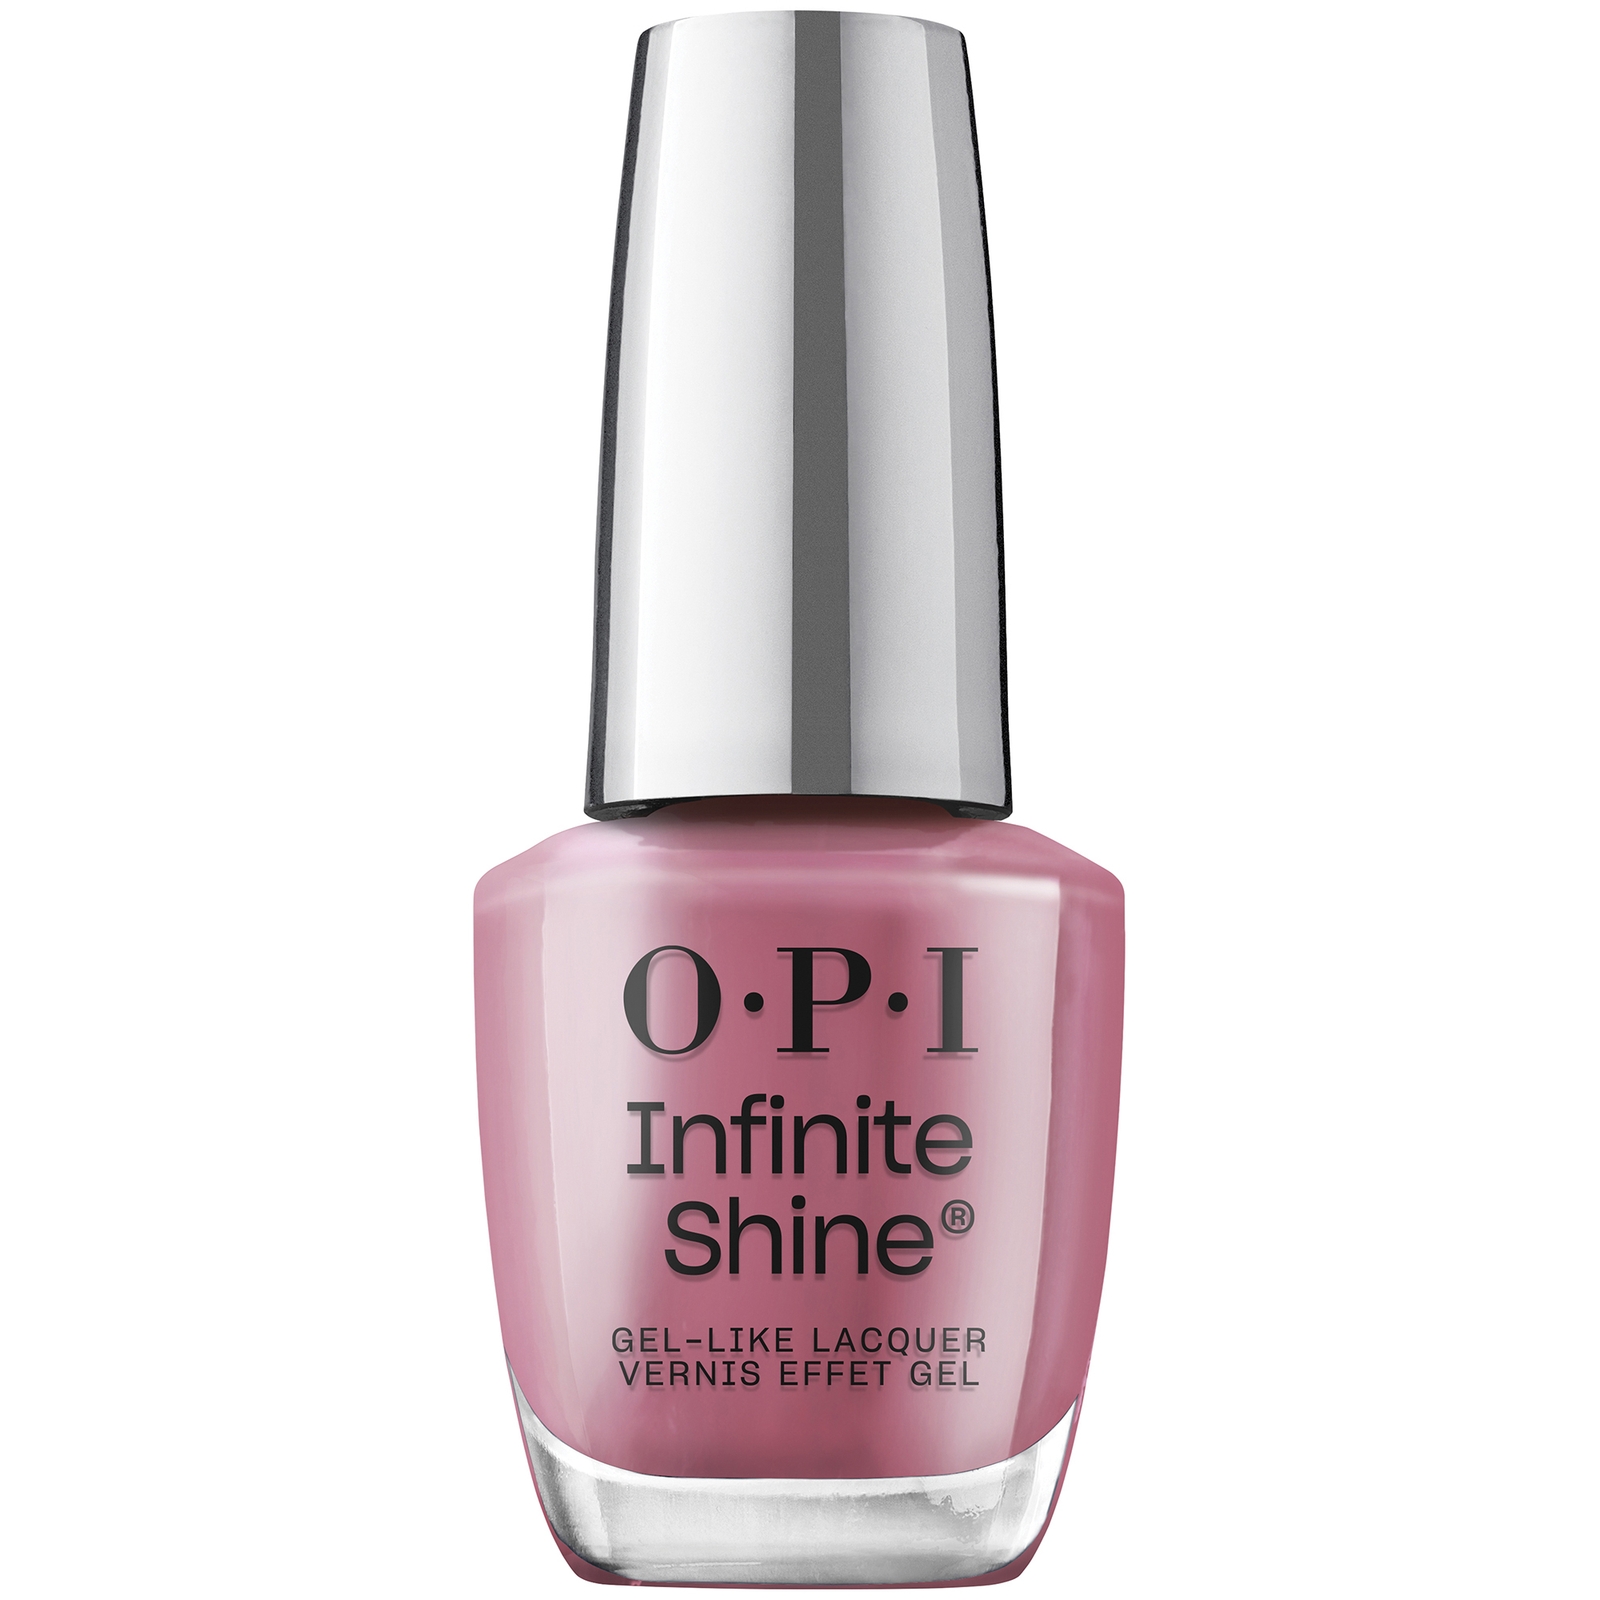 Opi Infinite Shine Long-wear Nail Polish - Times Infinity 15ml In White